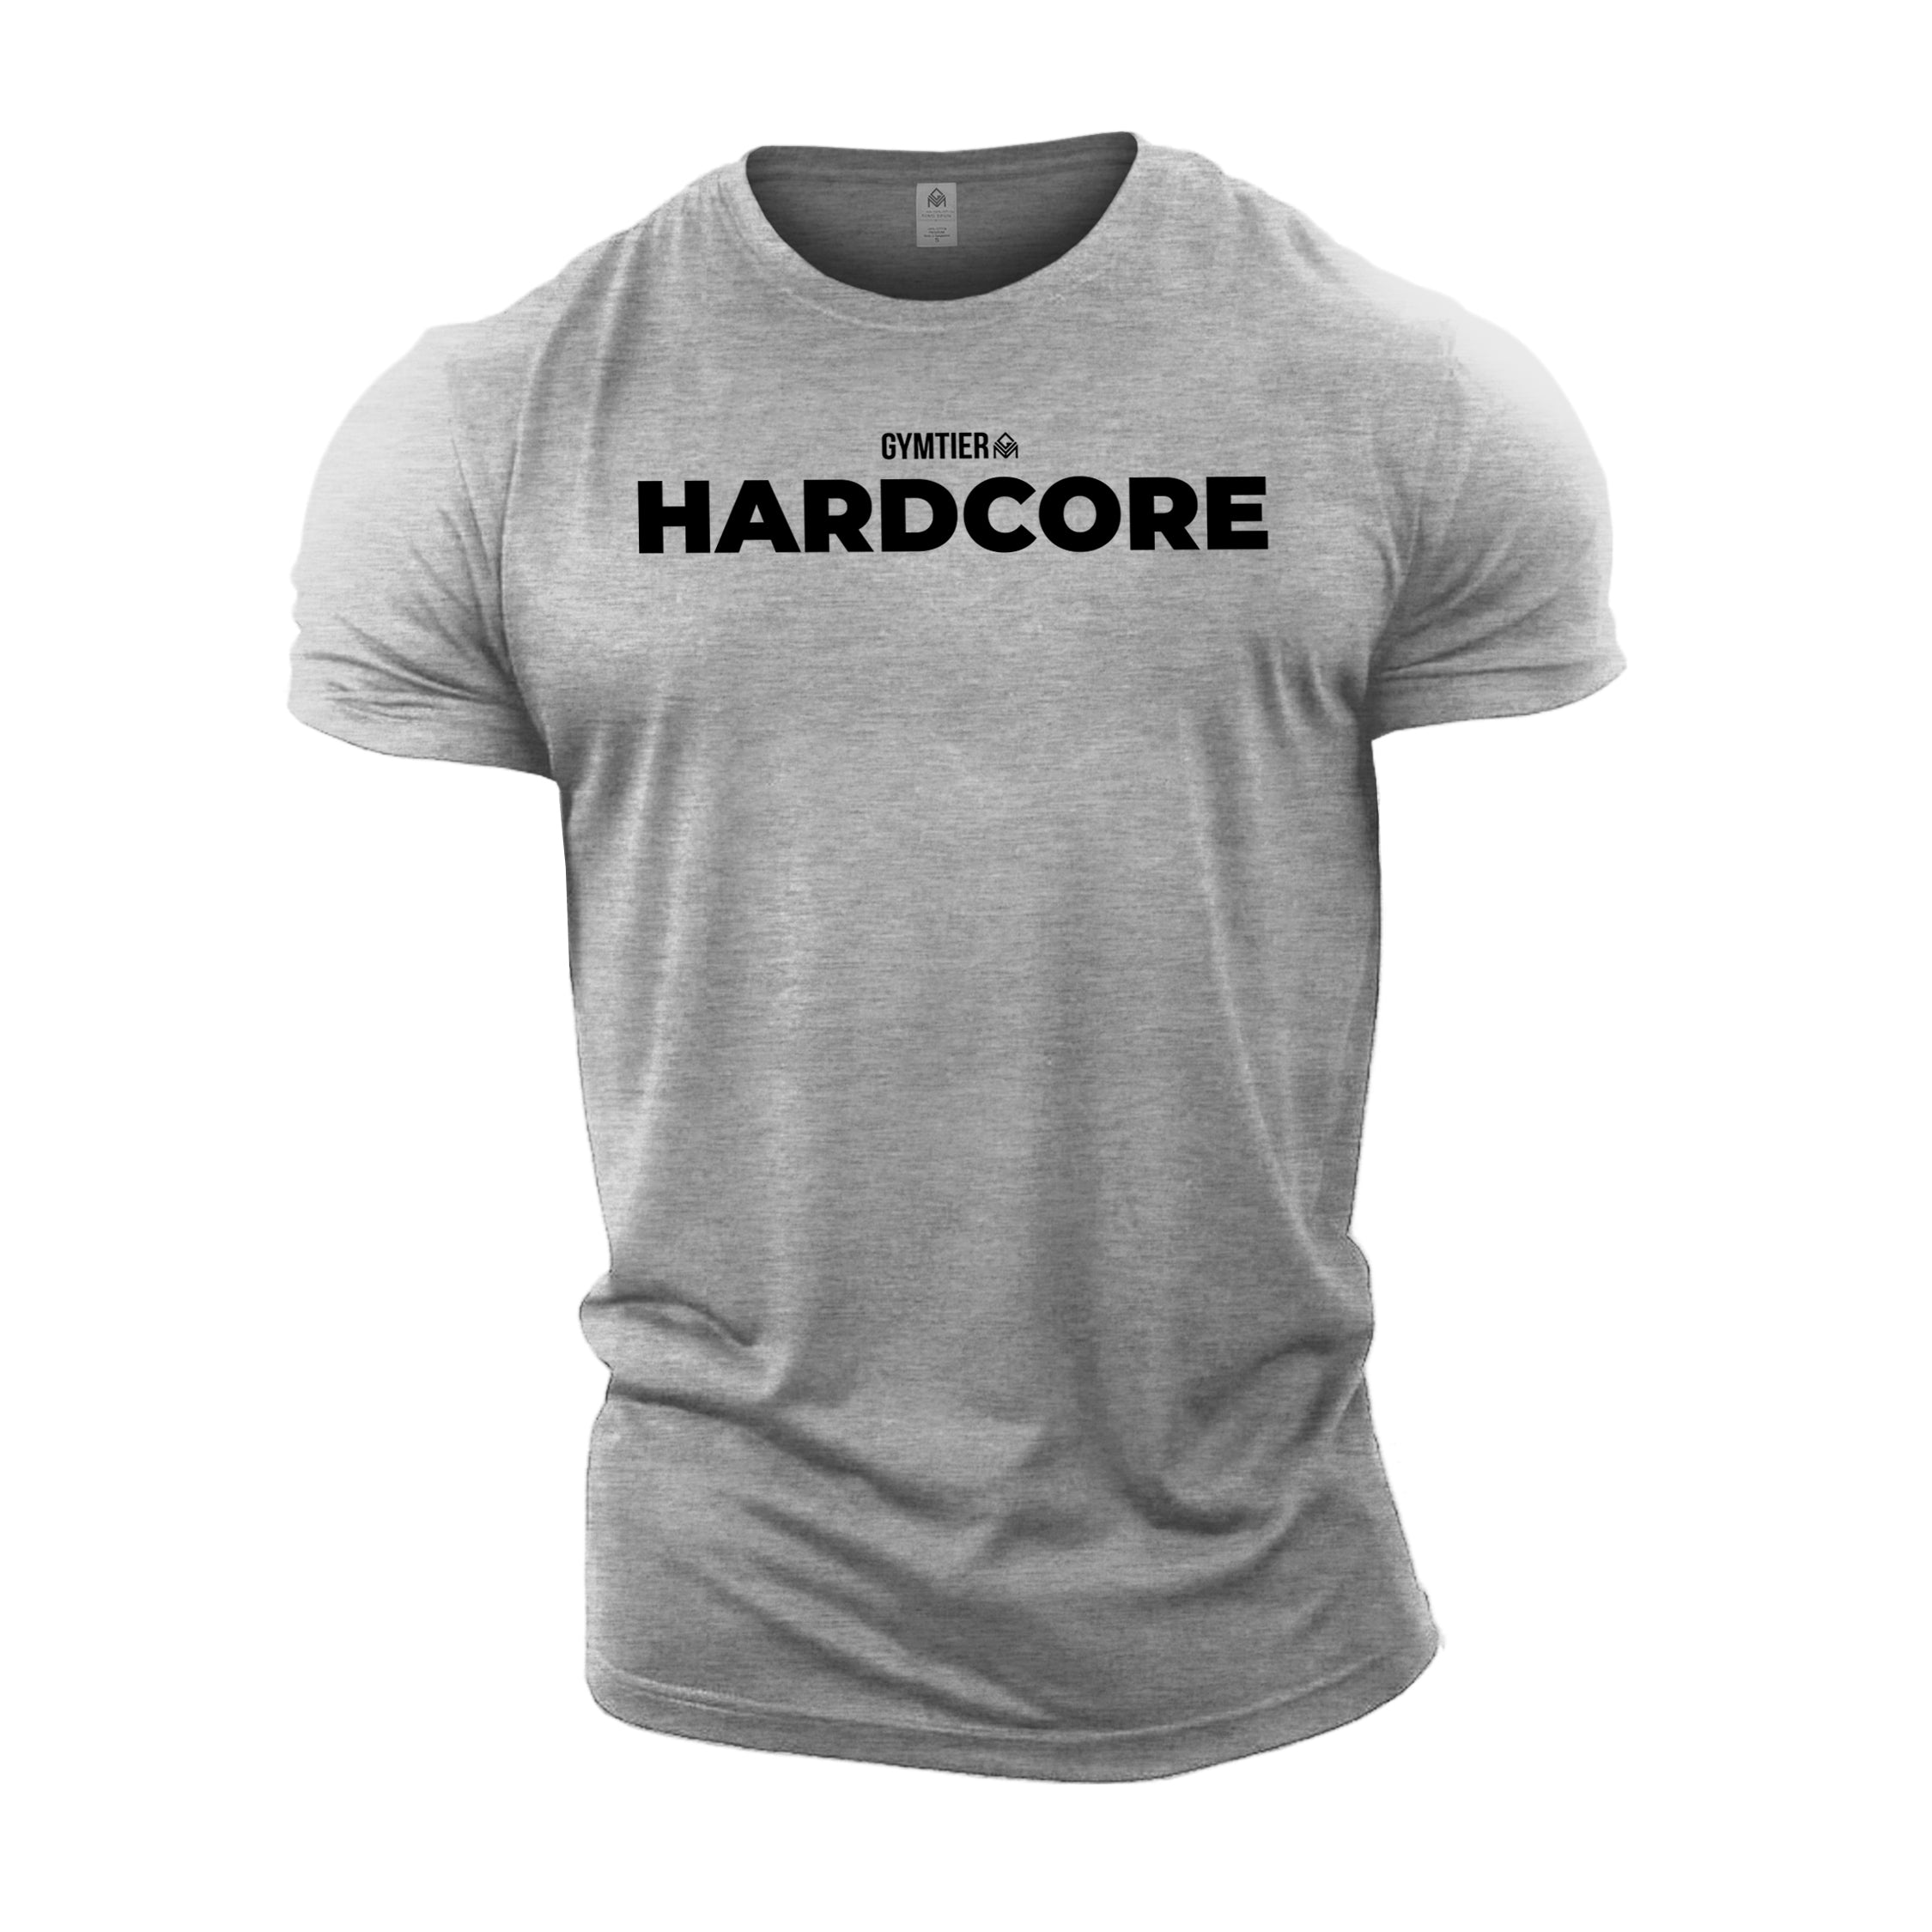 GYMTIER Hardcore T-Shirt